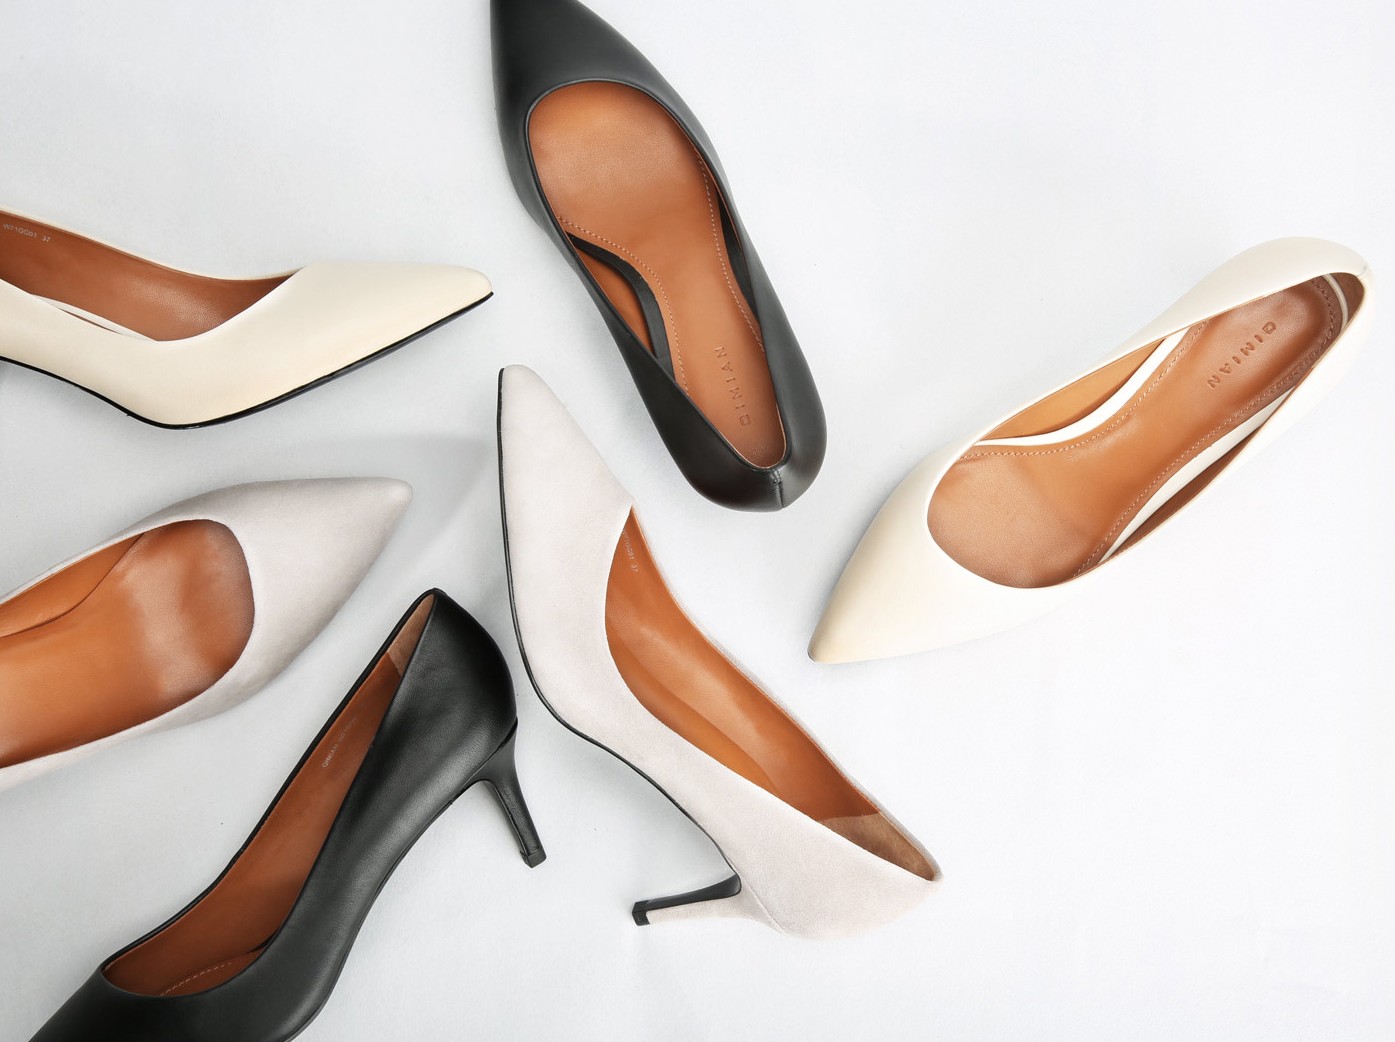 Qimian-High-heeled-Shoes-W71Gg01